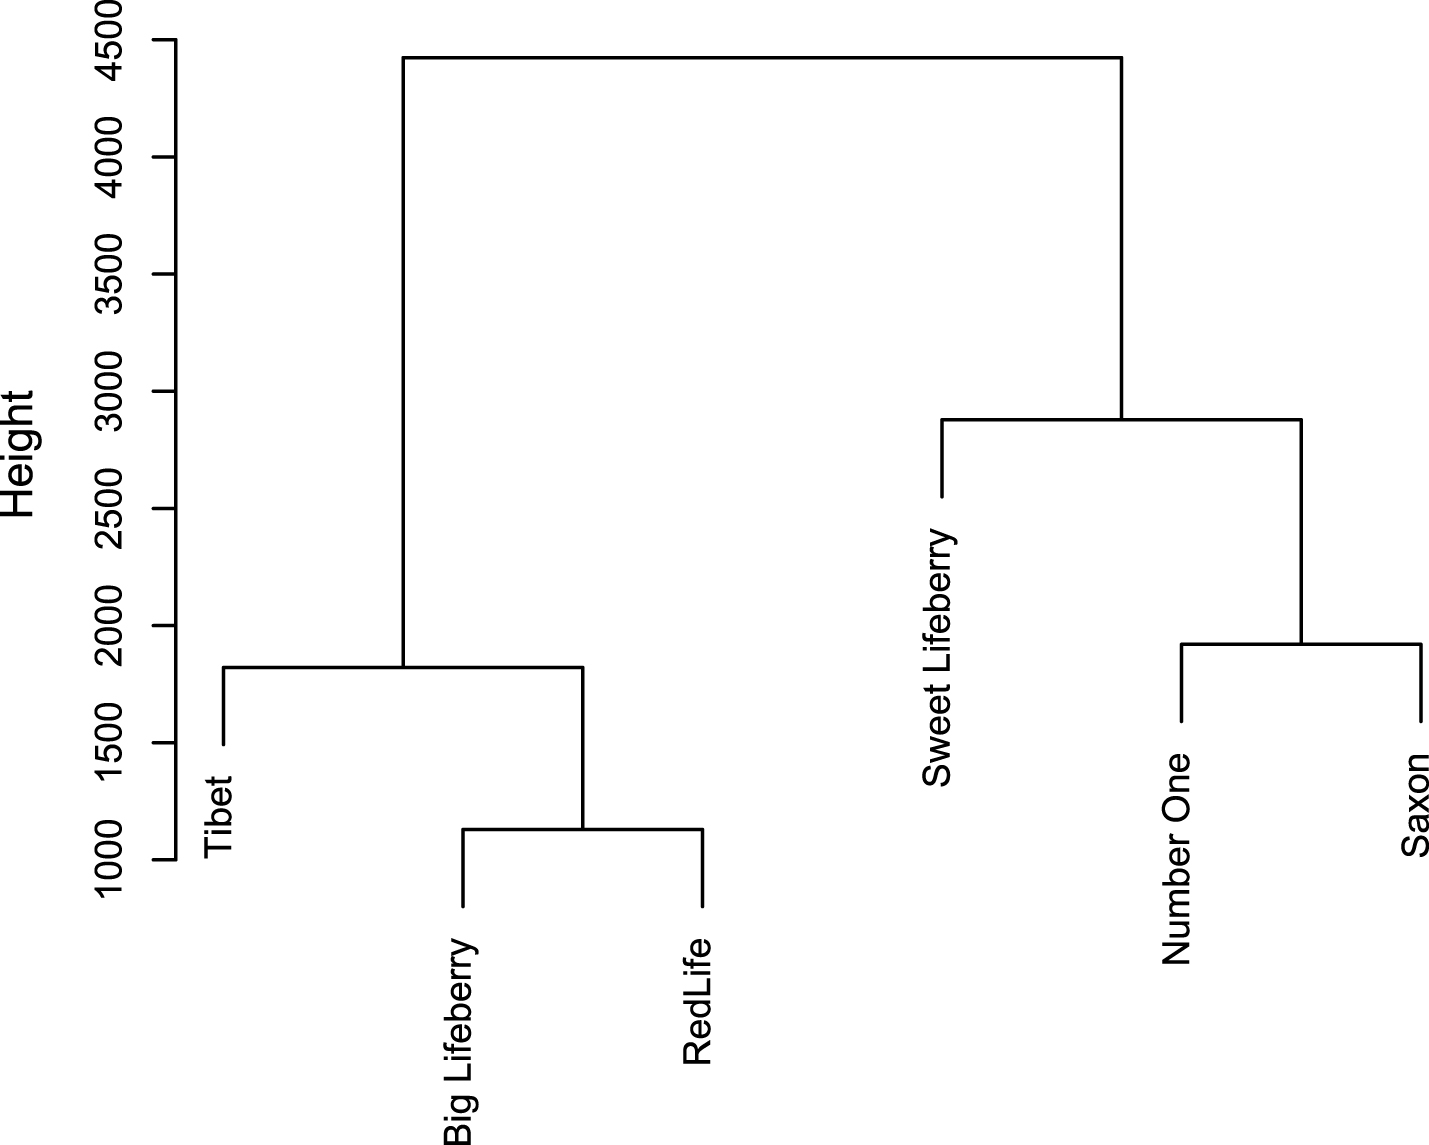 Cluster analysis with dendrogram representation of six goji cultivars.